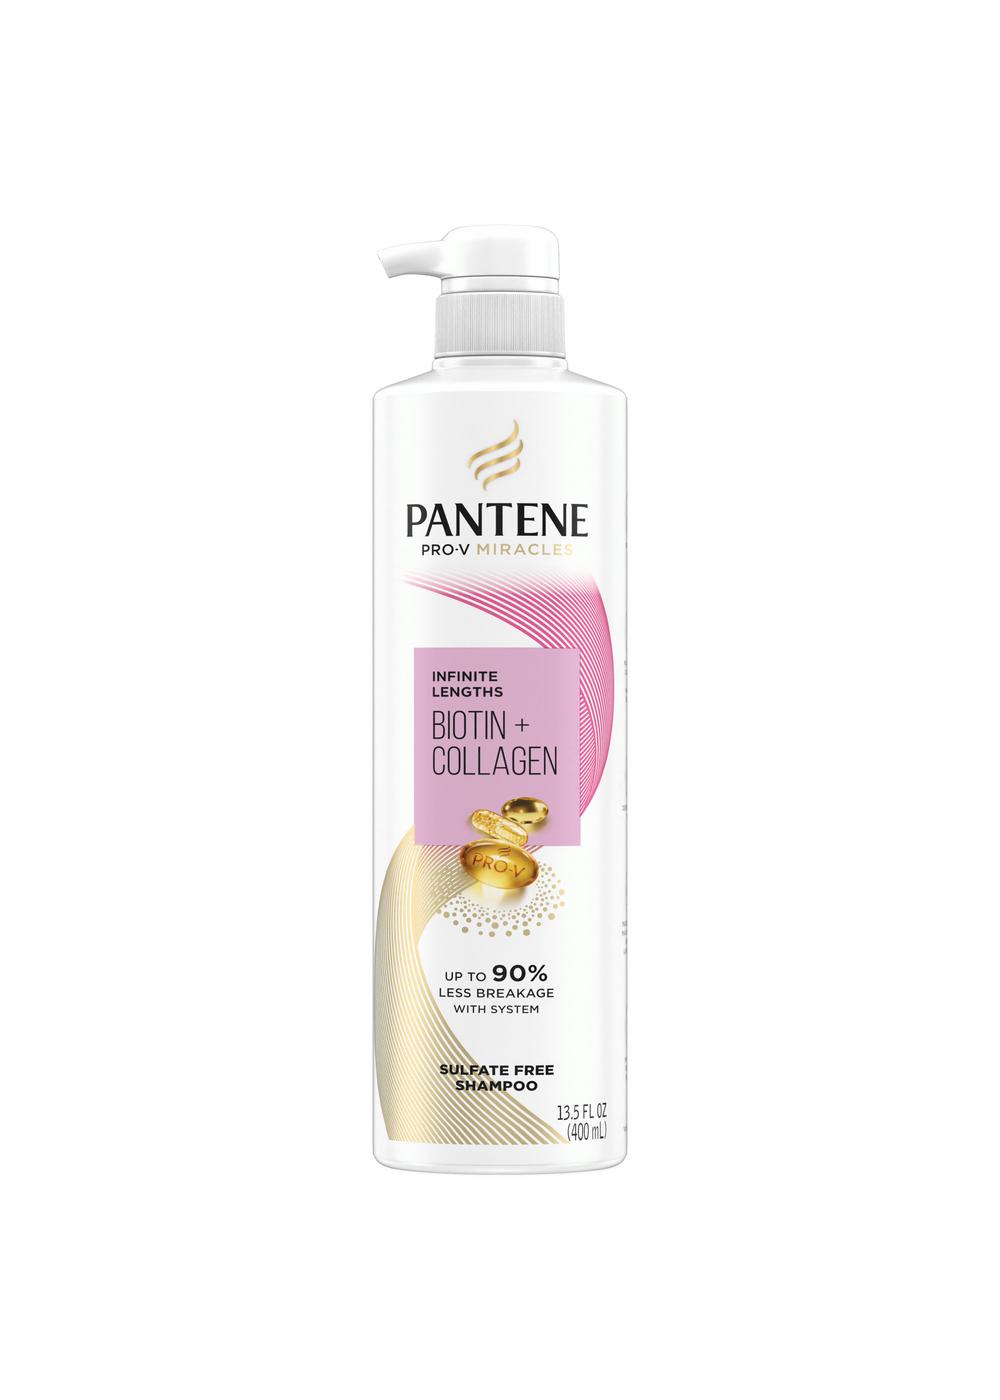 Pantene Infinite Lengths Biotin + Collagen Shampoo ; image 1 of 2